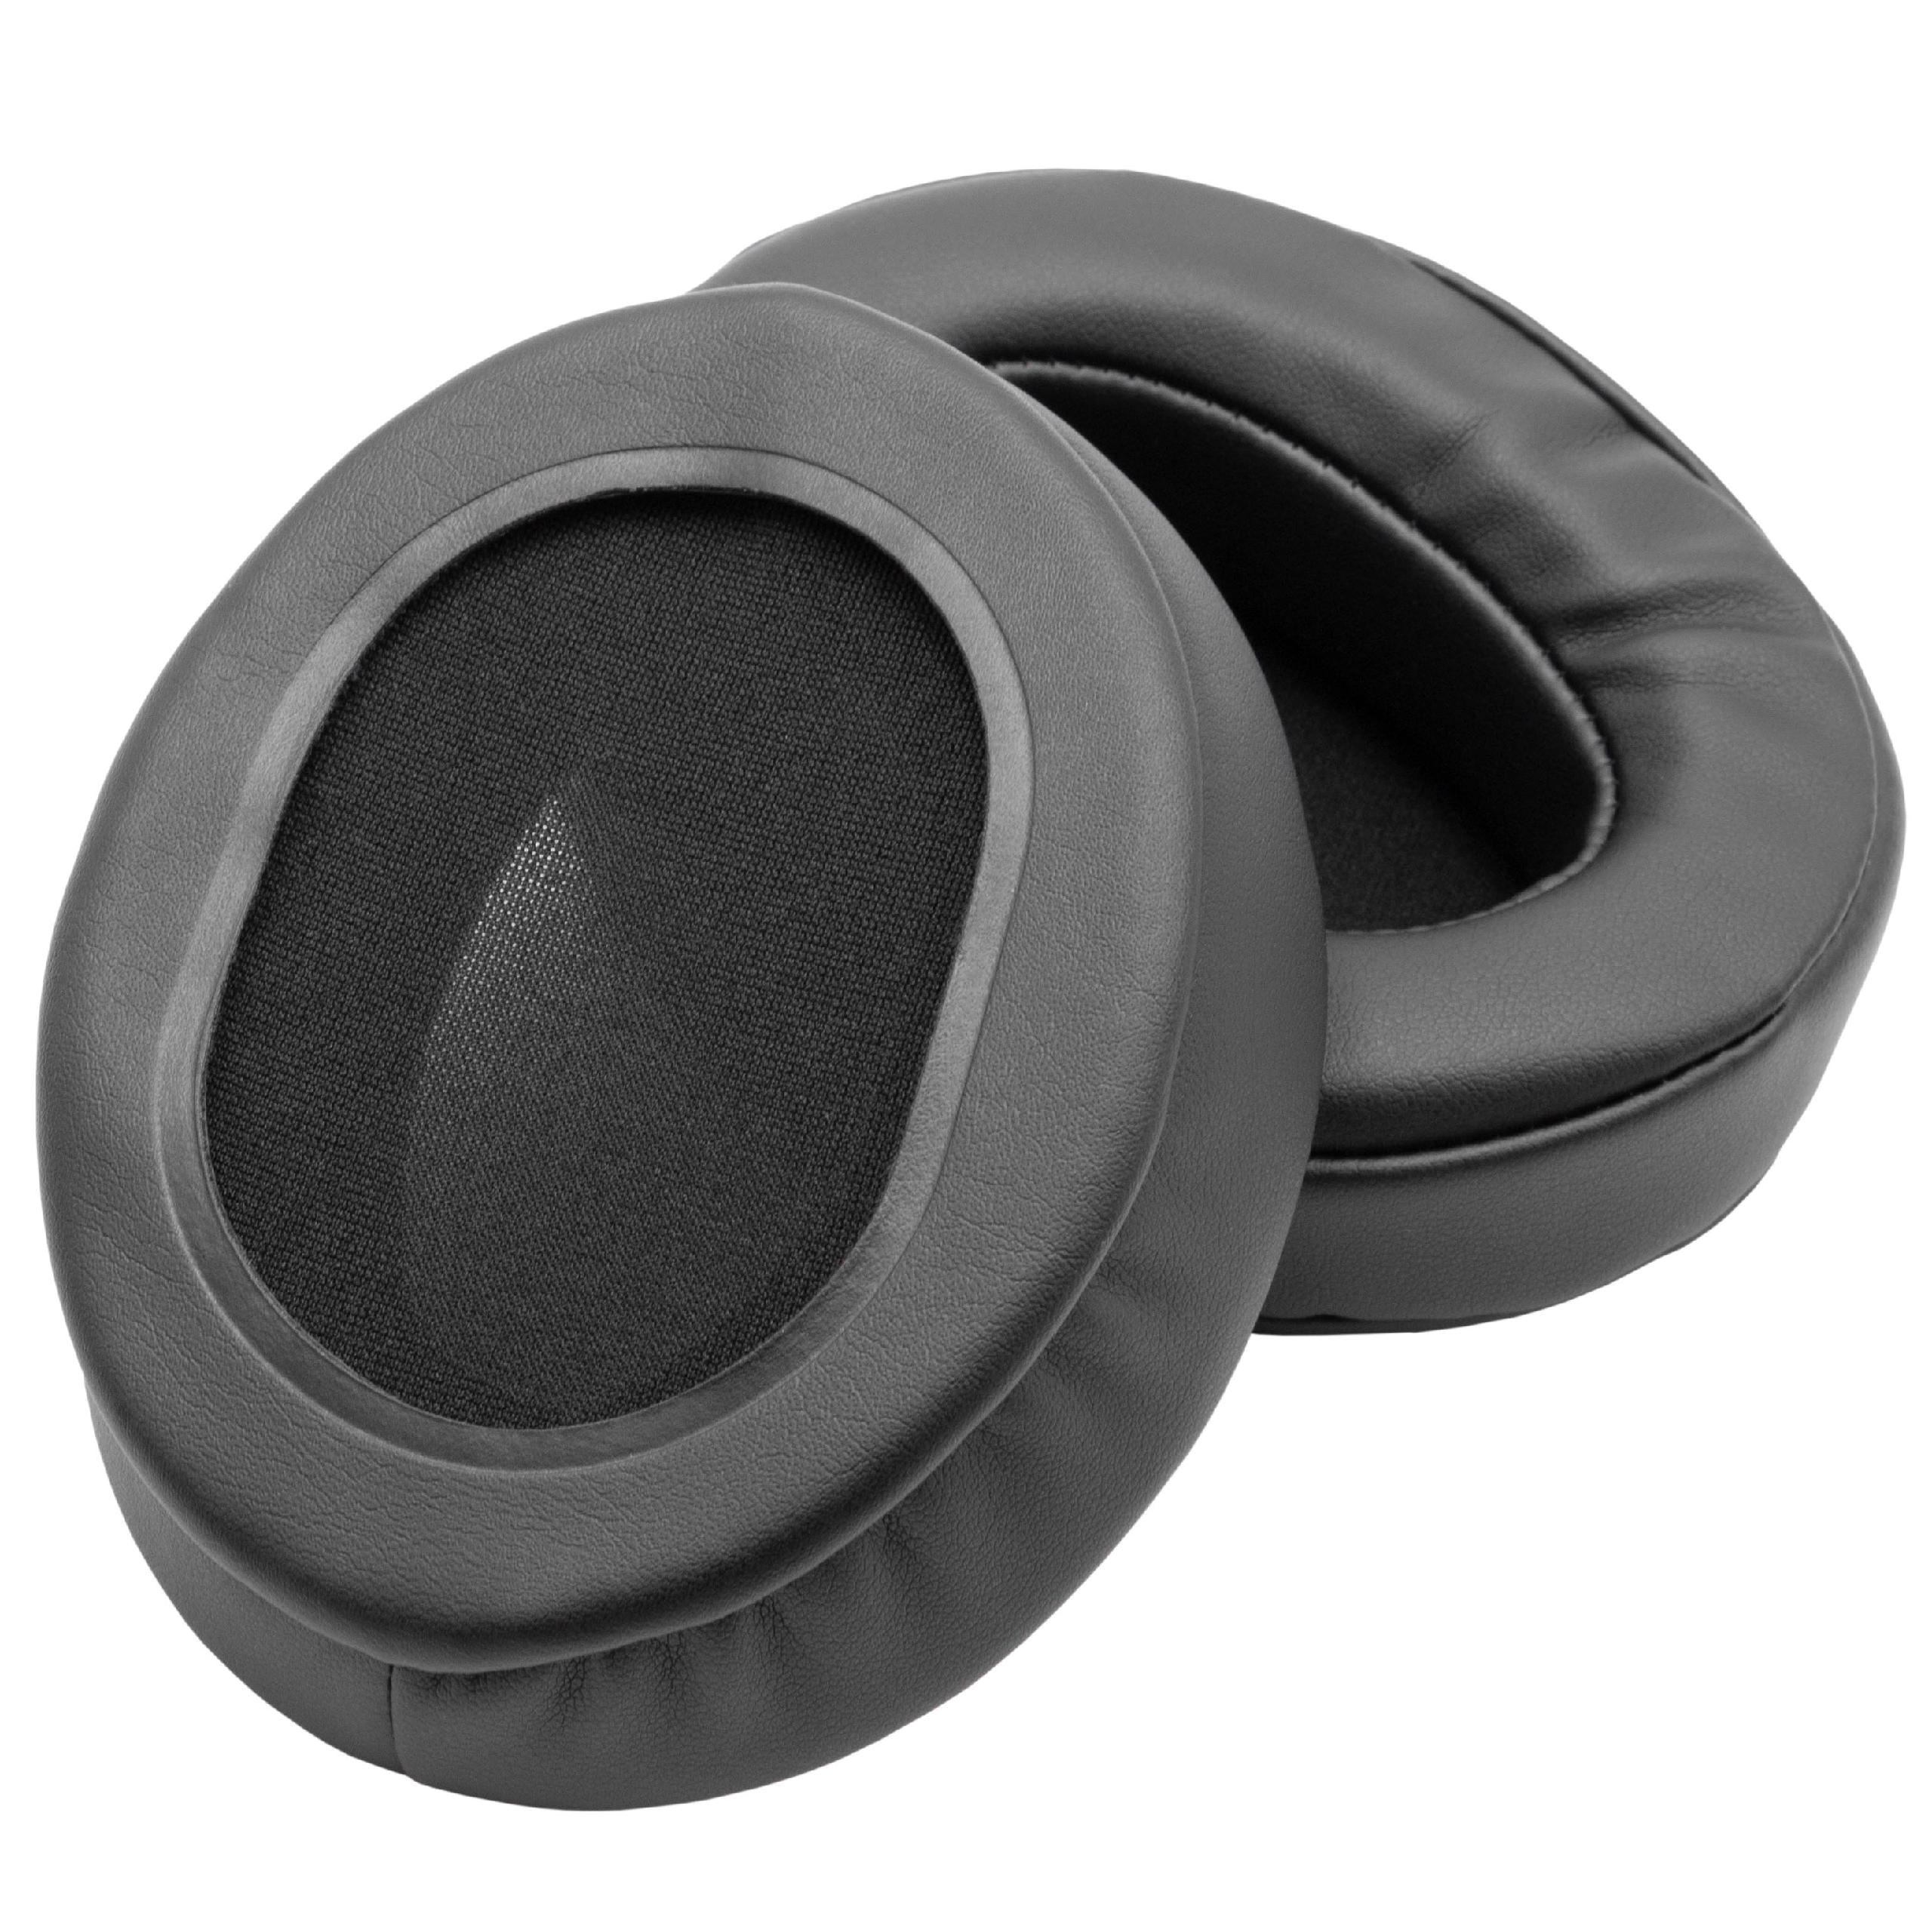 Ear Pads suitable for Roland / Brainwavz RH-300 Headphones etc. - polyurethane / foam, 26 mm thick